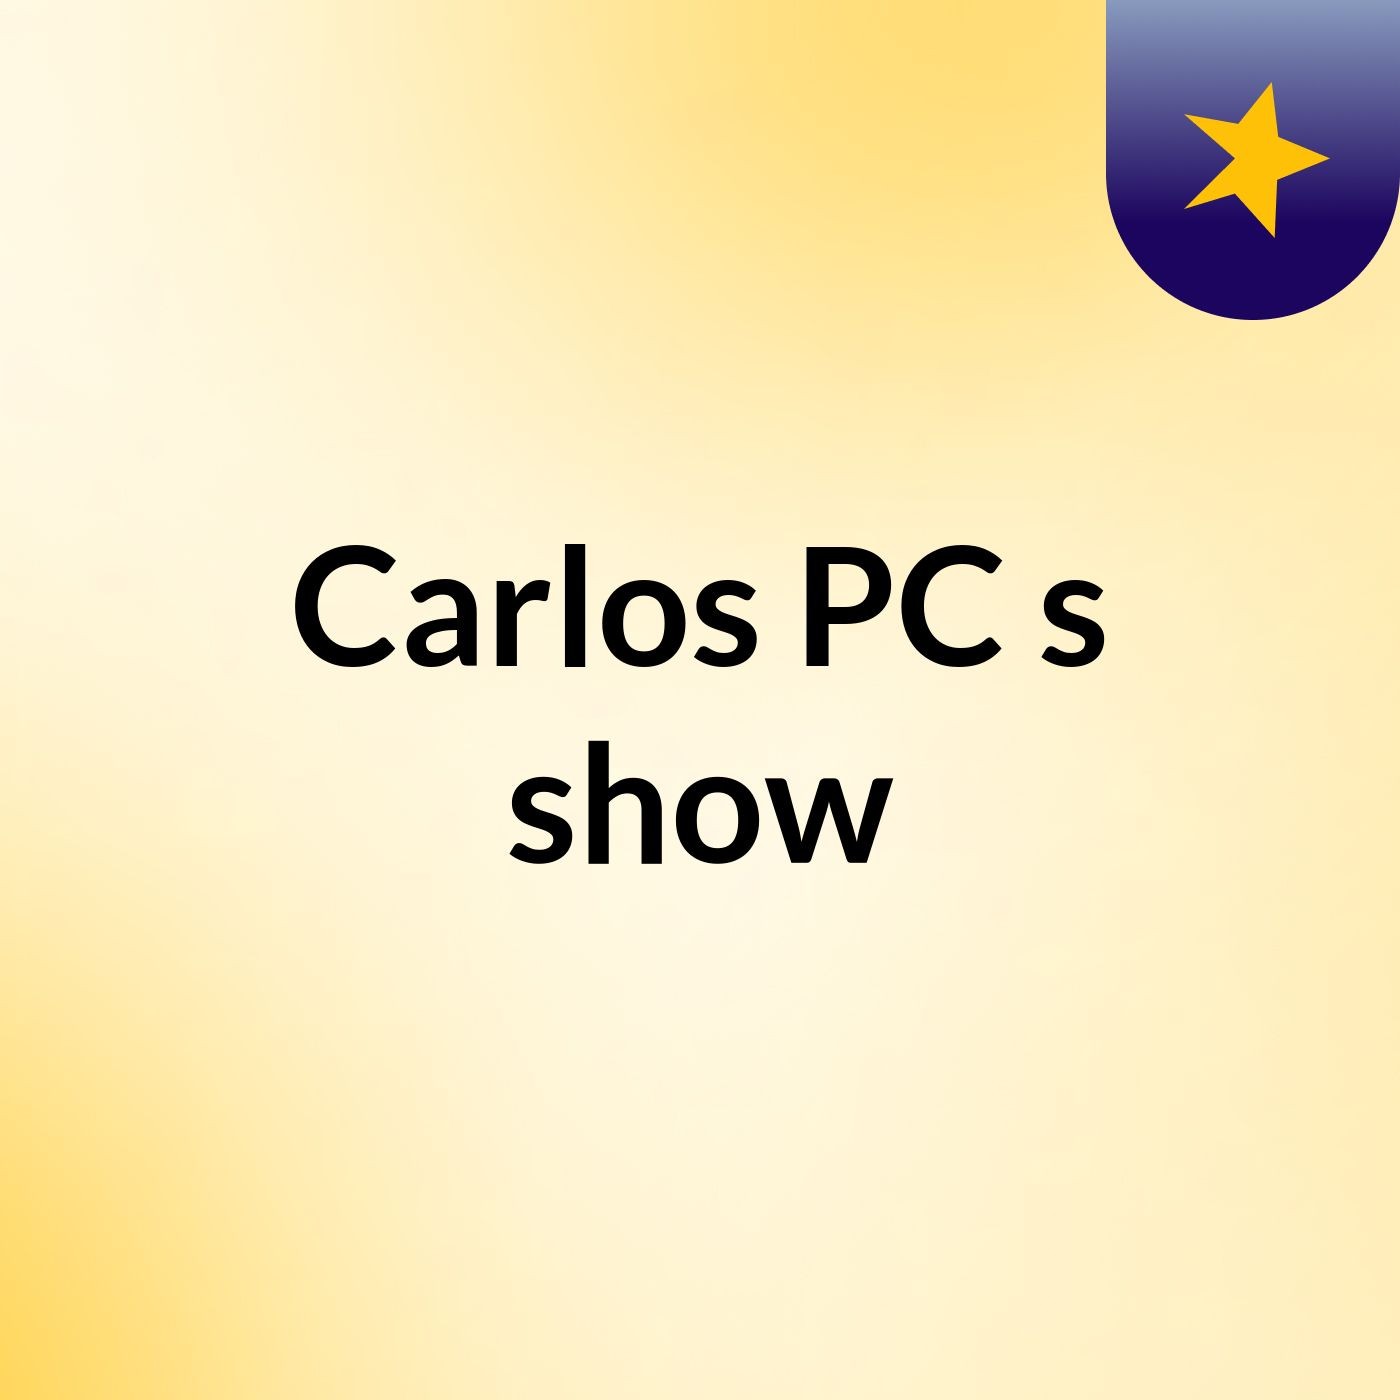 Carlos PC's show